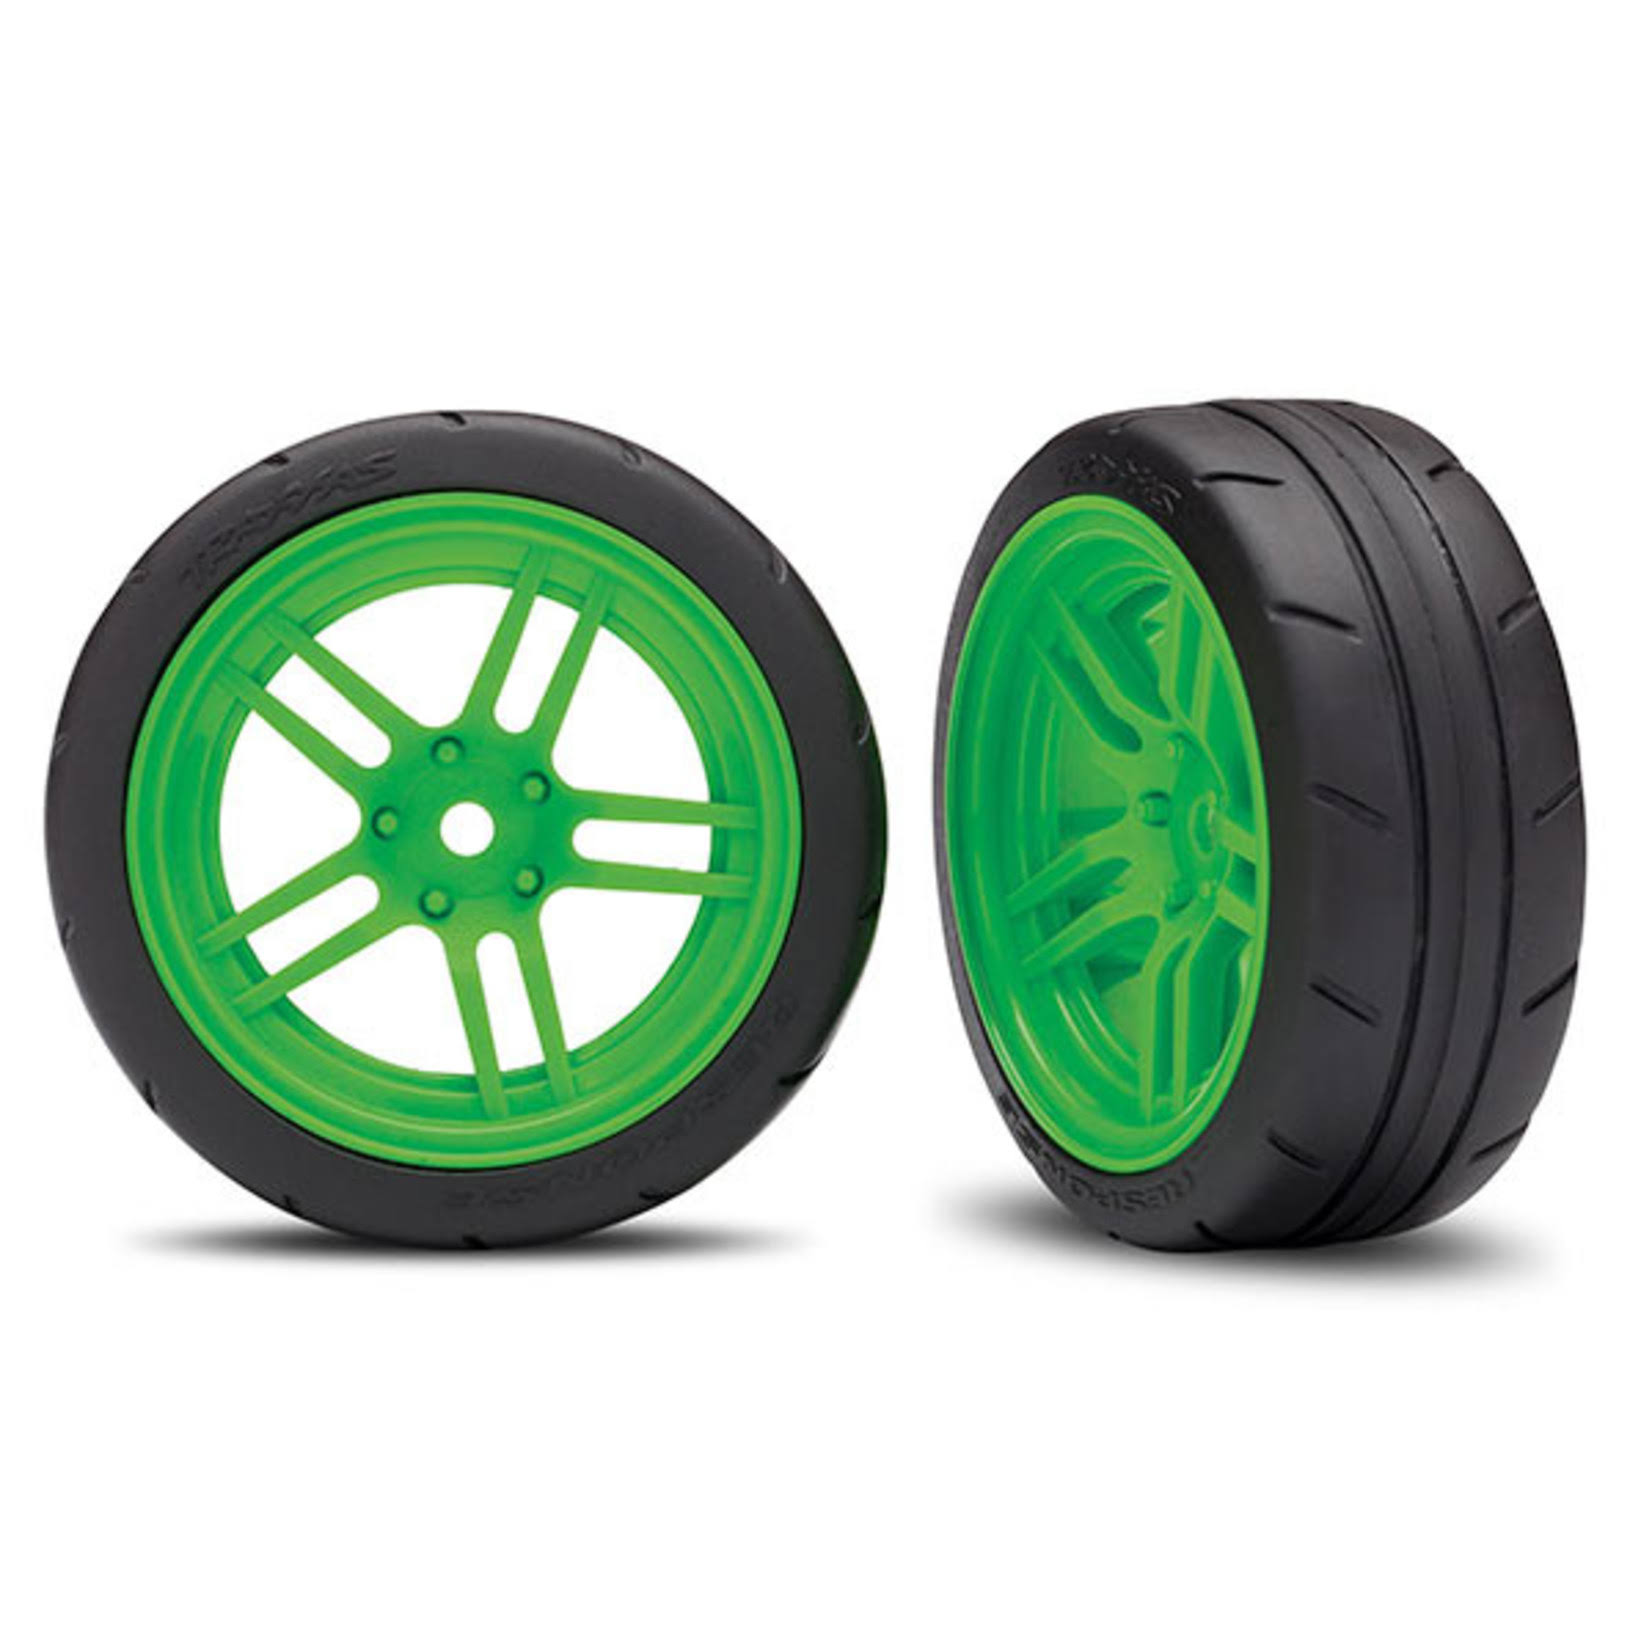 Traxxas 8373G - Tires & Wheels, Split Spoke, Front, Green, Assembled